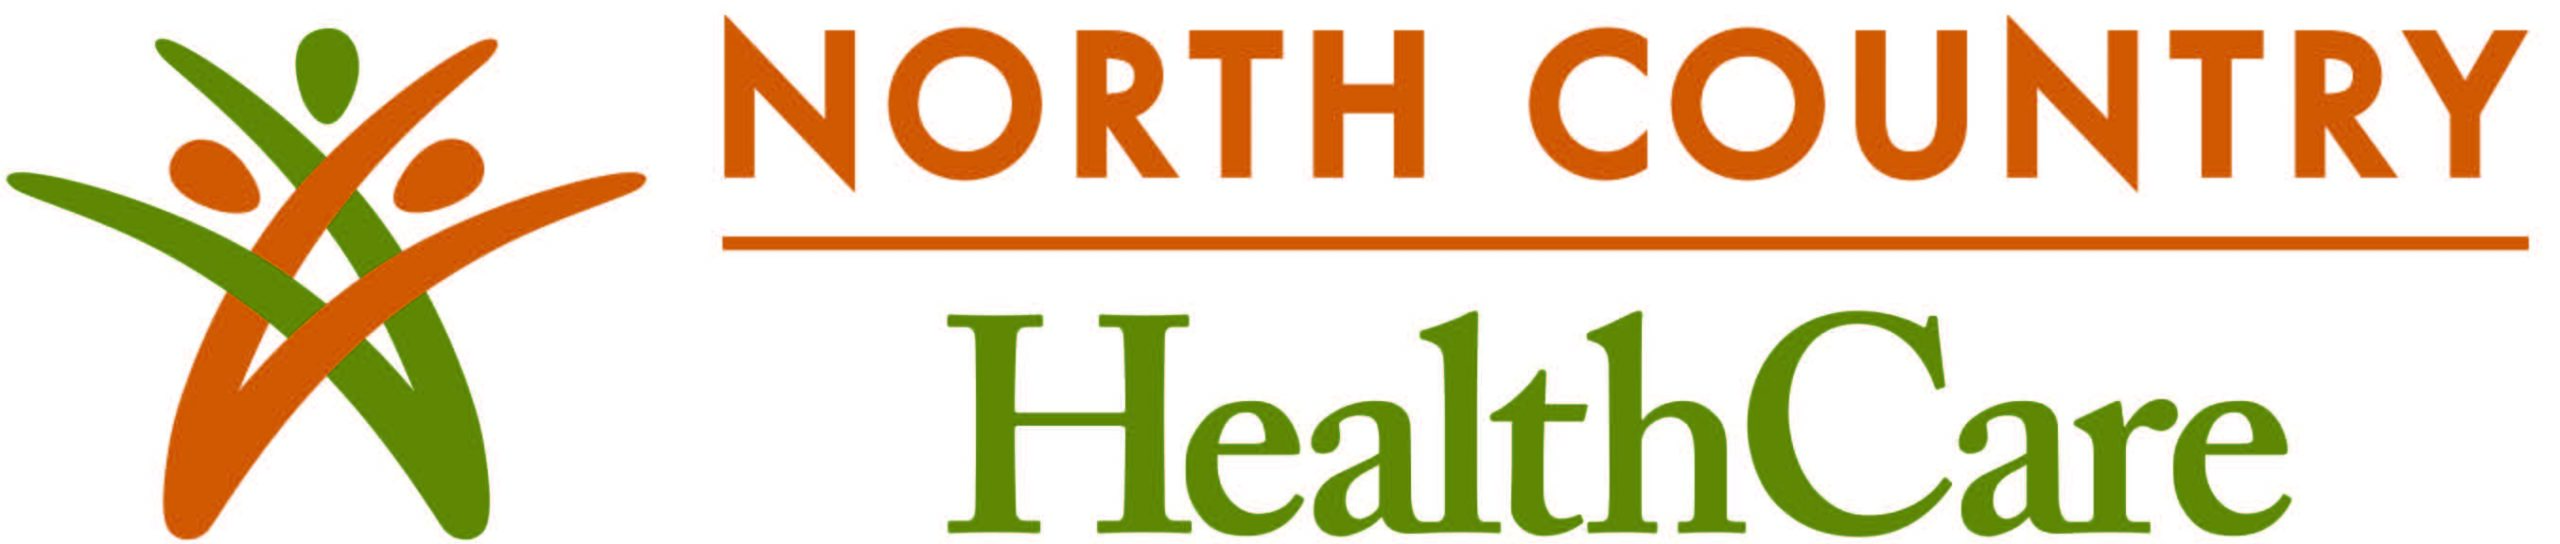 North Country Healthcare - Logo